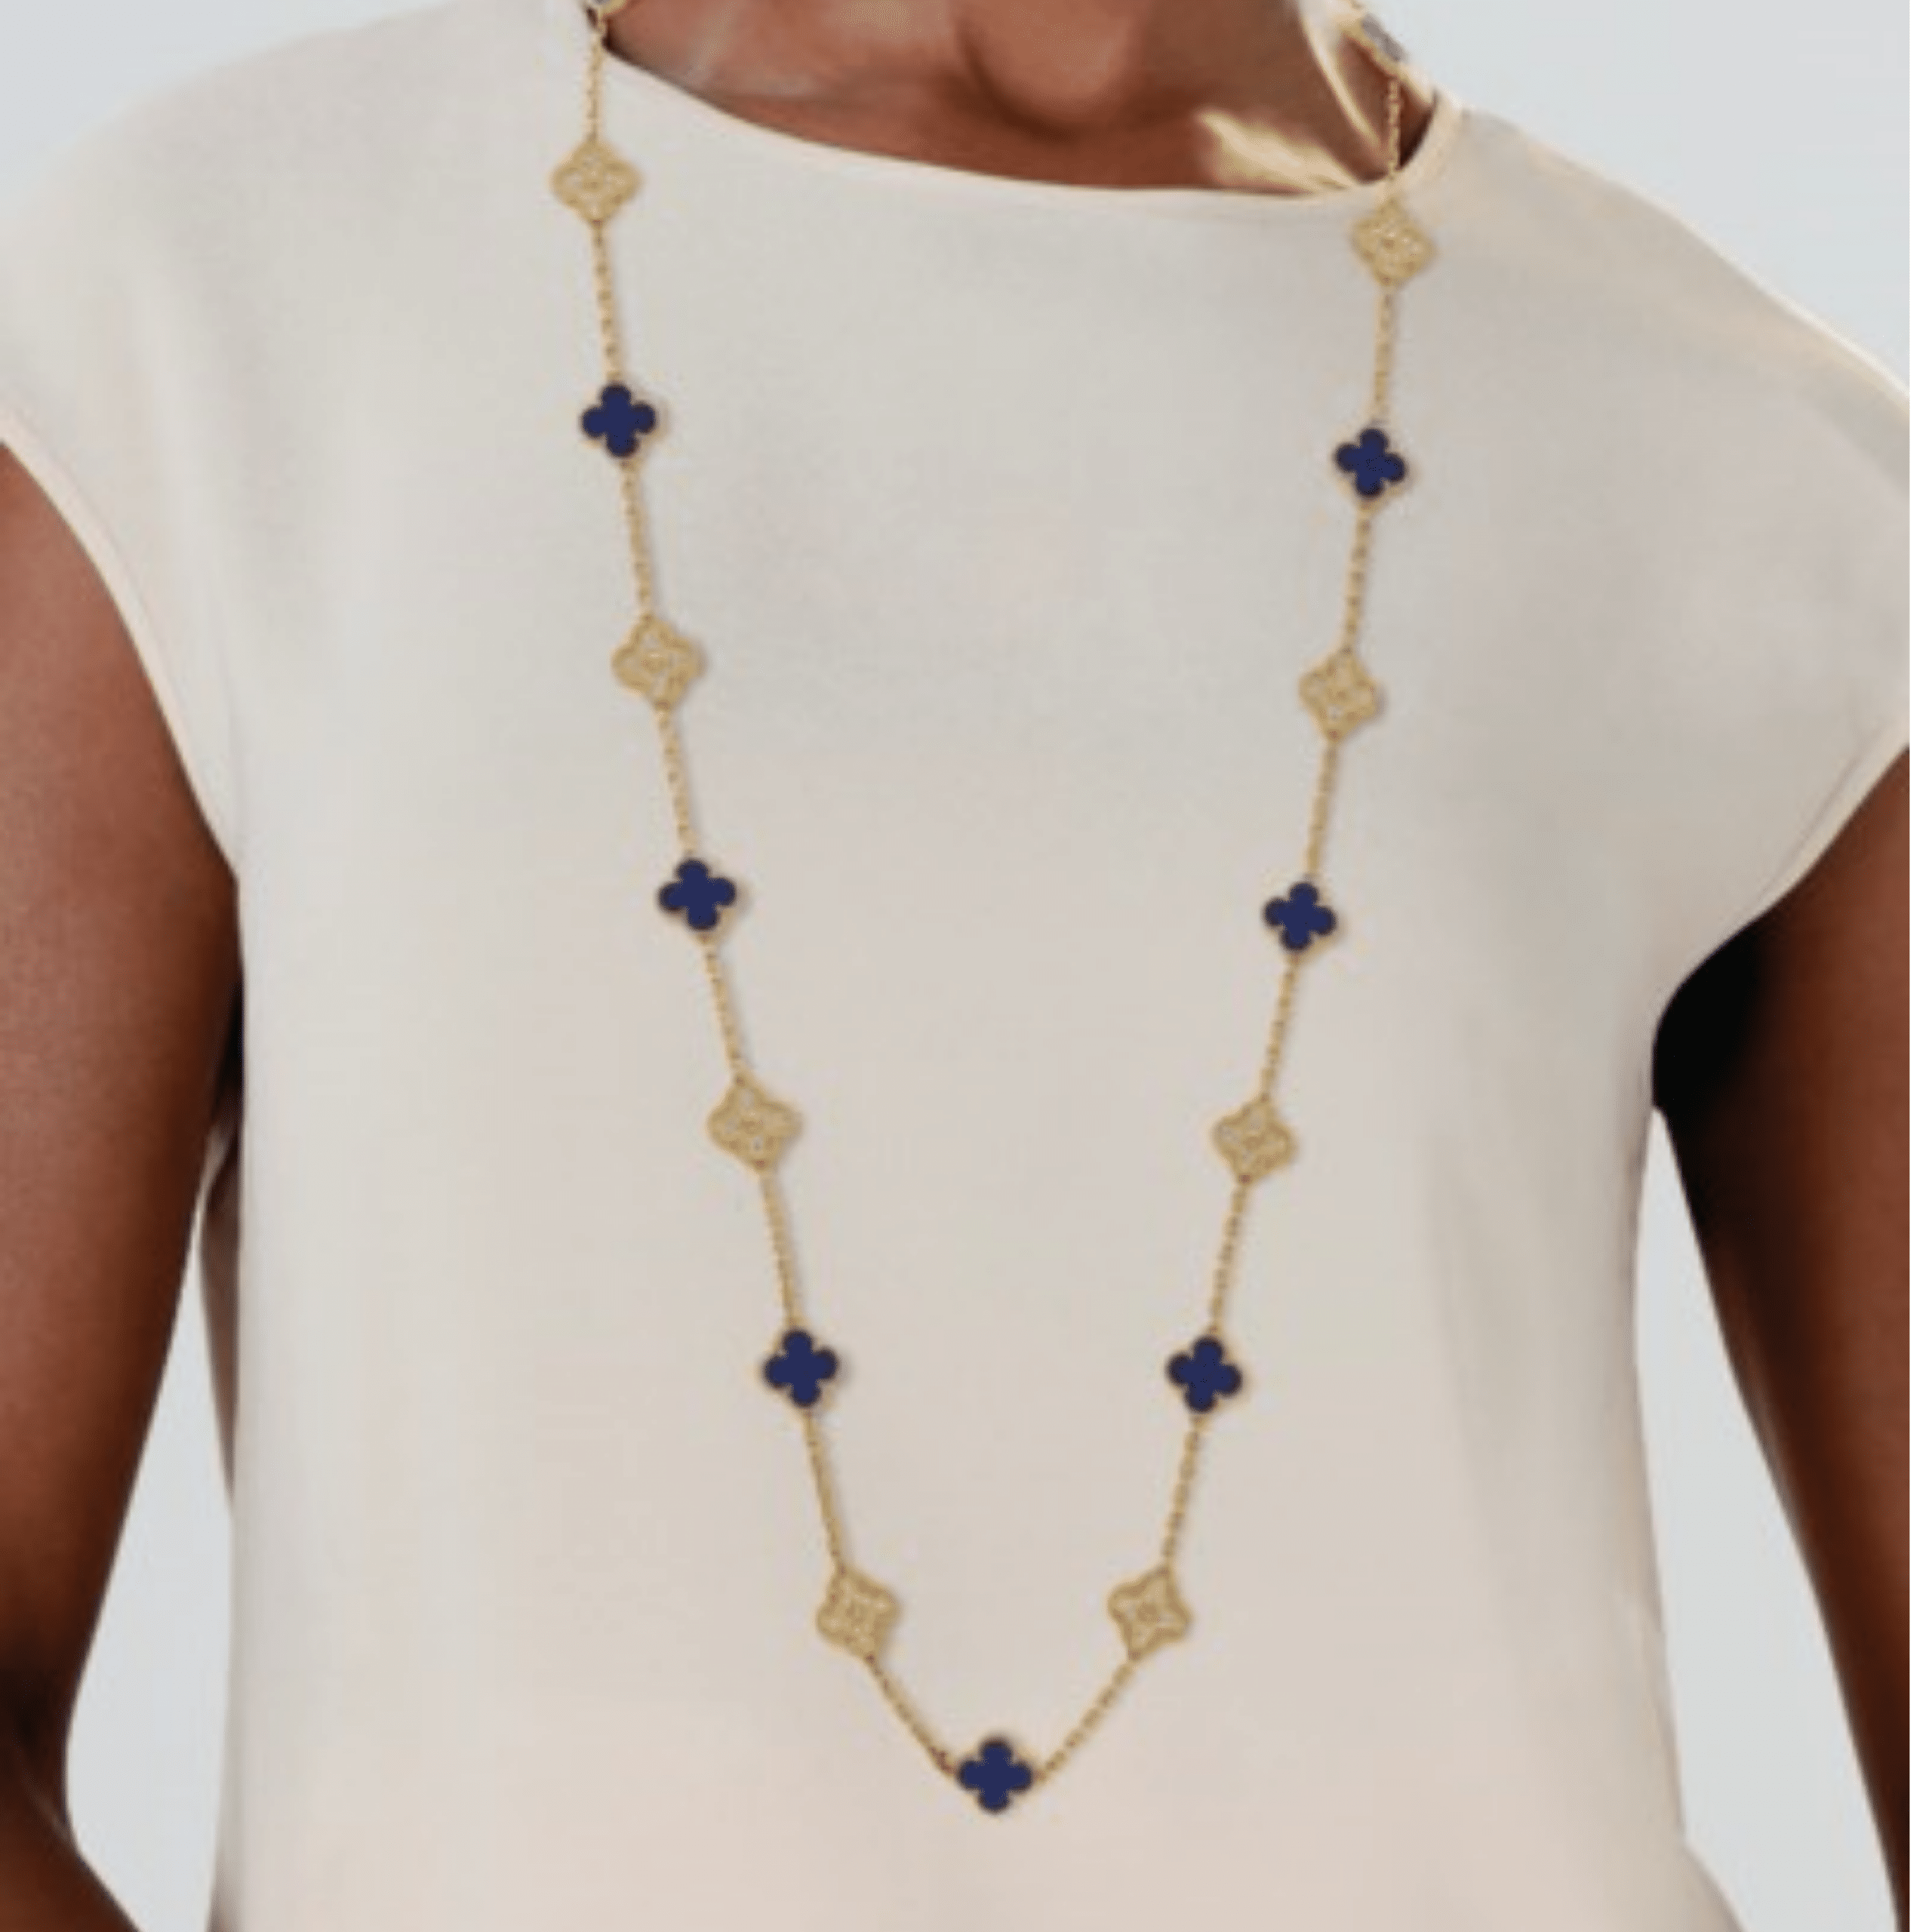 GOLD 'VINTAGE ALHAMBRA' NECKLACE, VAN CLEEF & ARPELS, Jewels Online, Jewellery